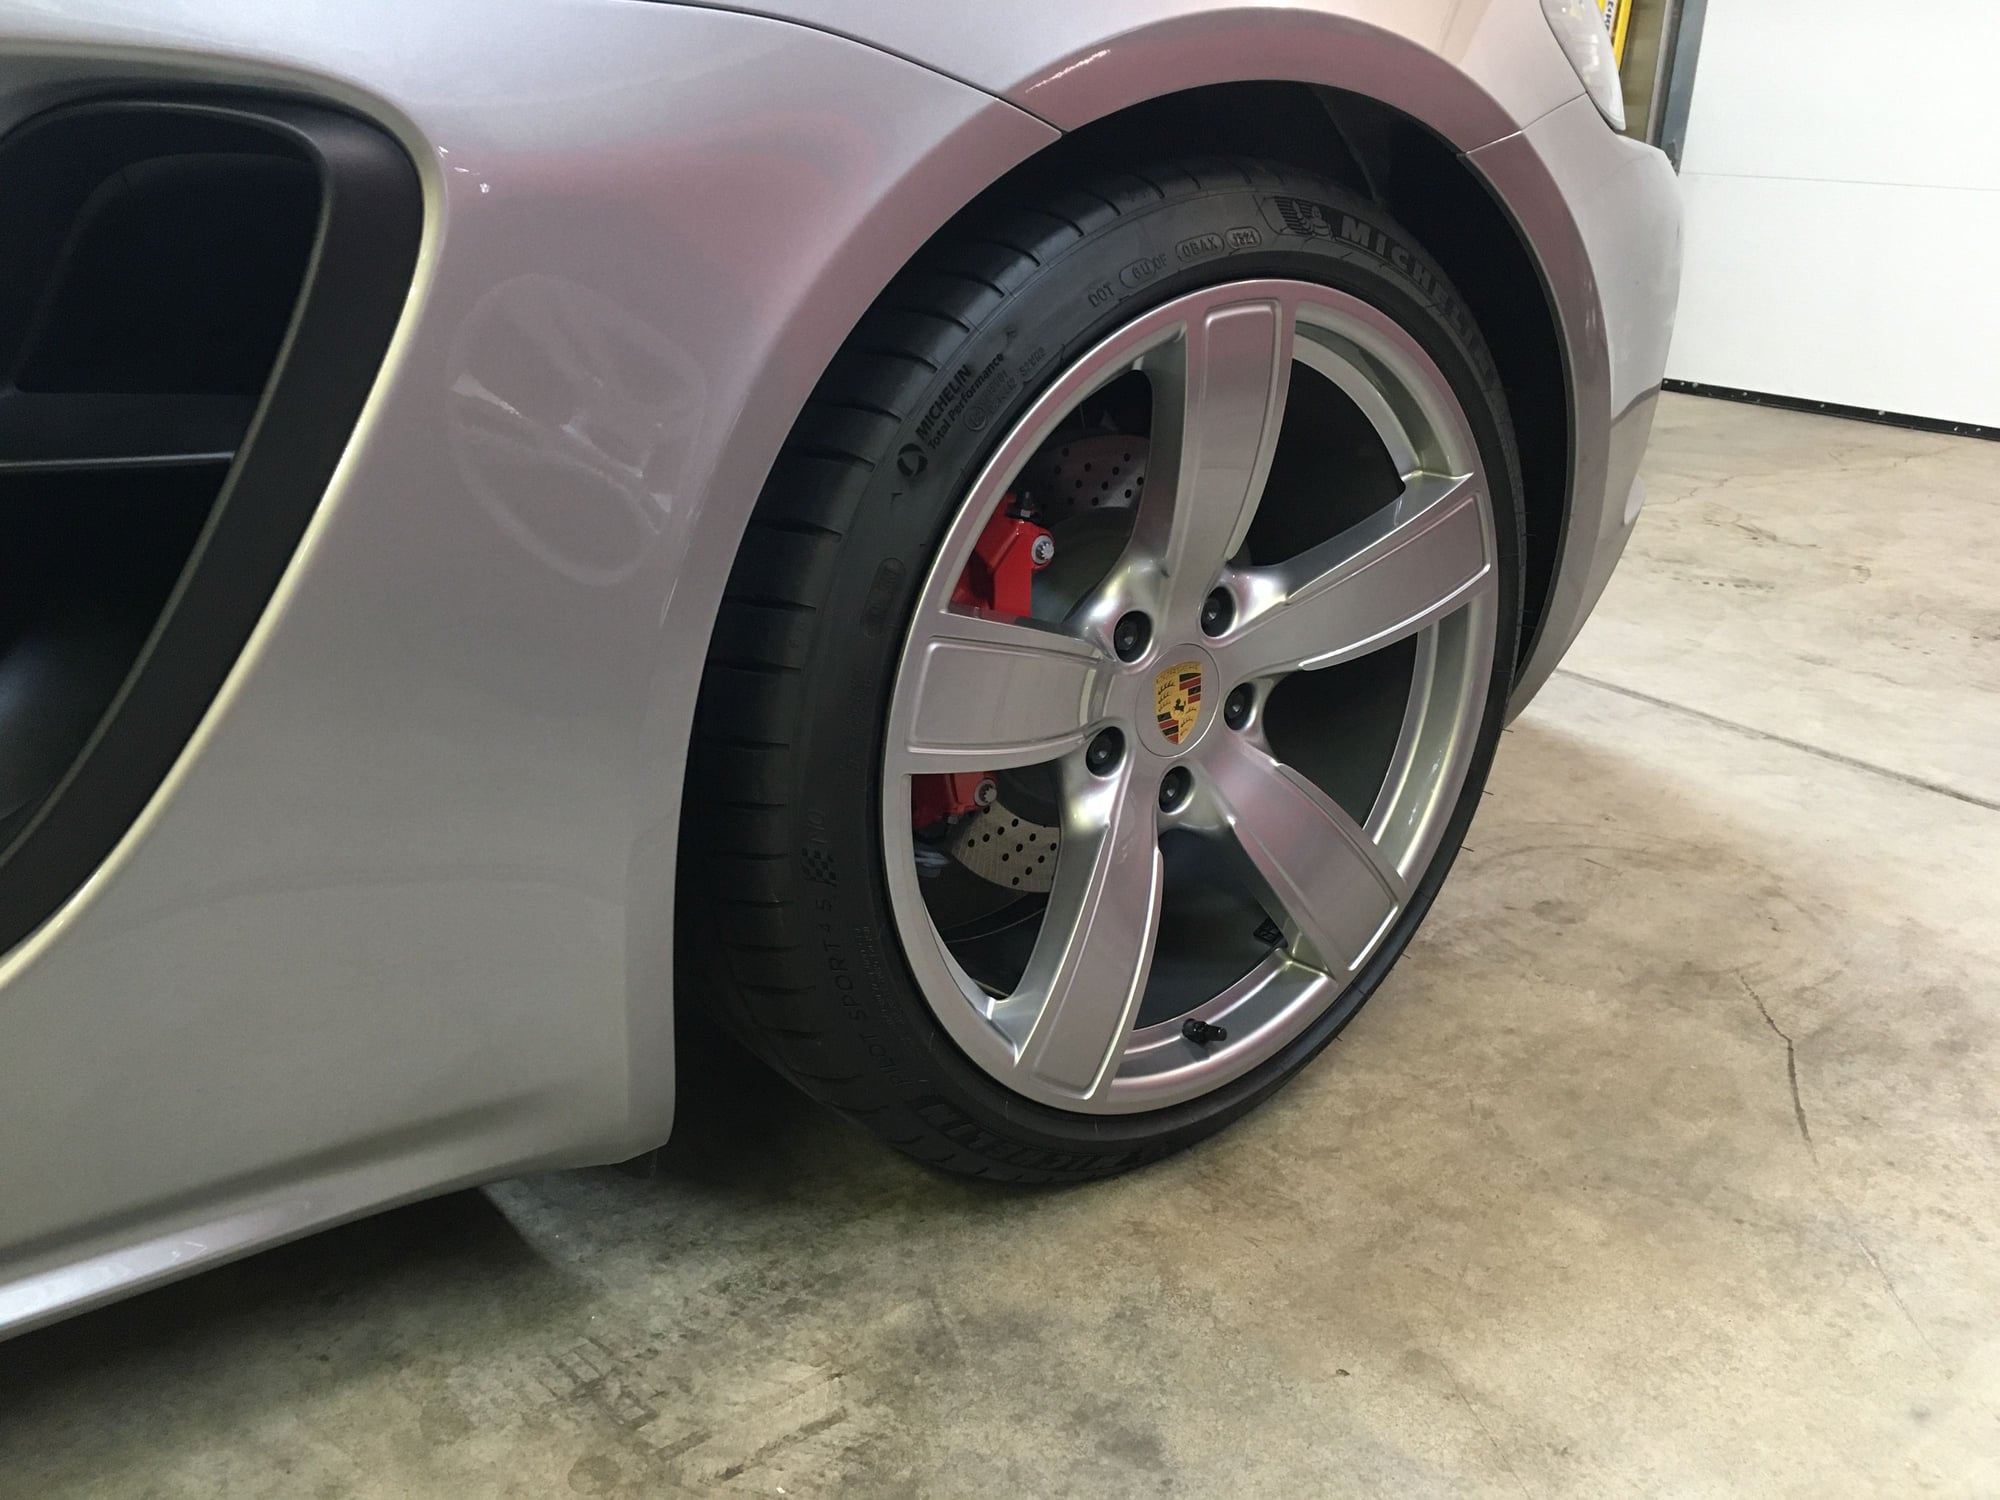 Ceramic wheel coating 2022 - recommended brands? - Rennlist - Porsche  Discussion Forums